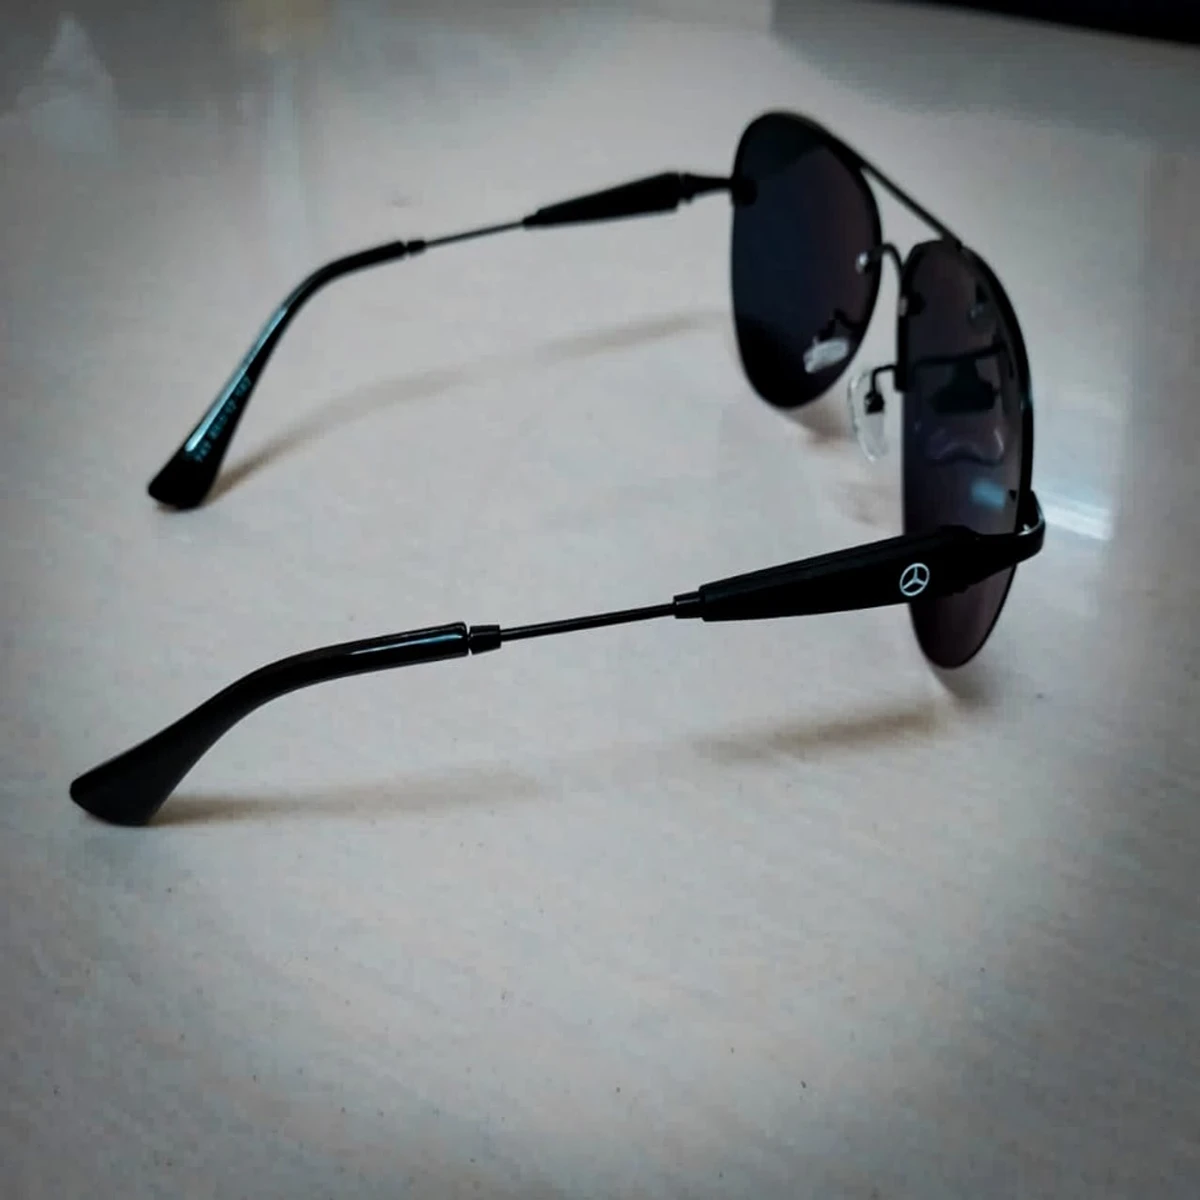 (Bmw)SUNGLASSES Men polarized Driving Sunglasses New (black)